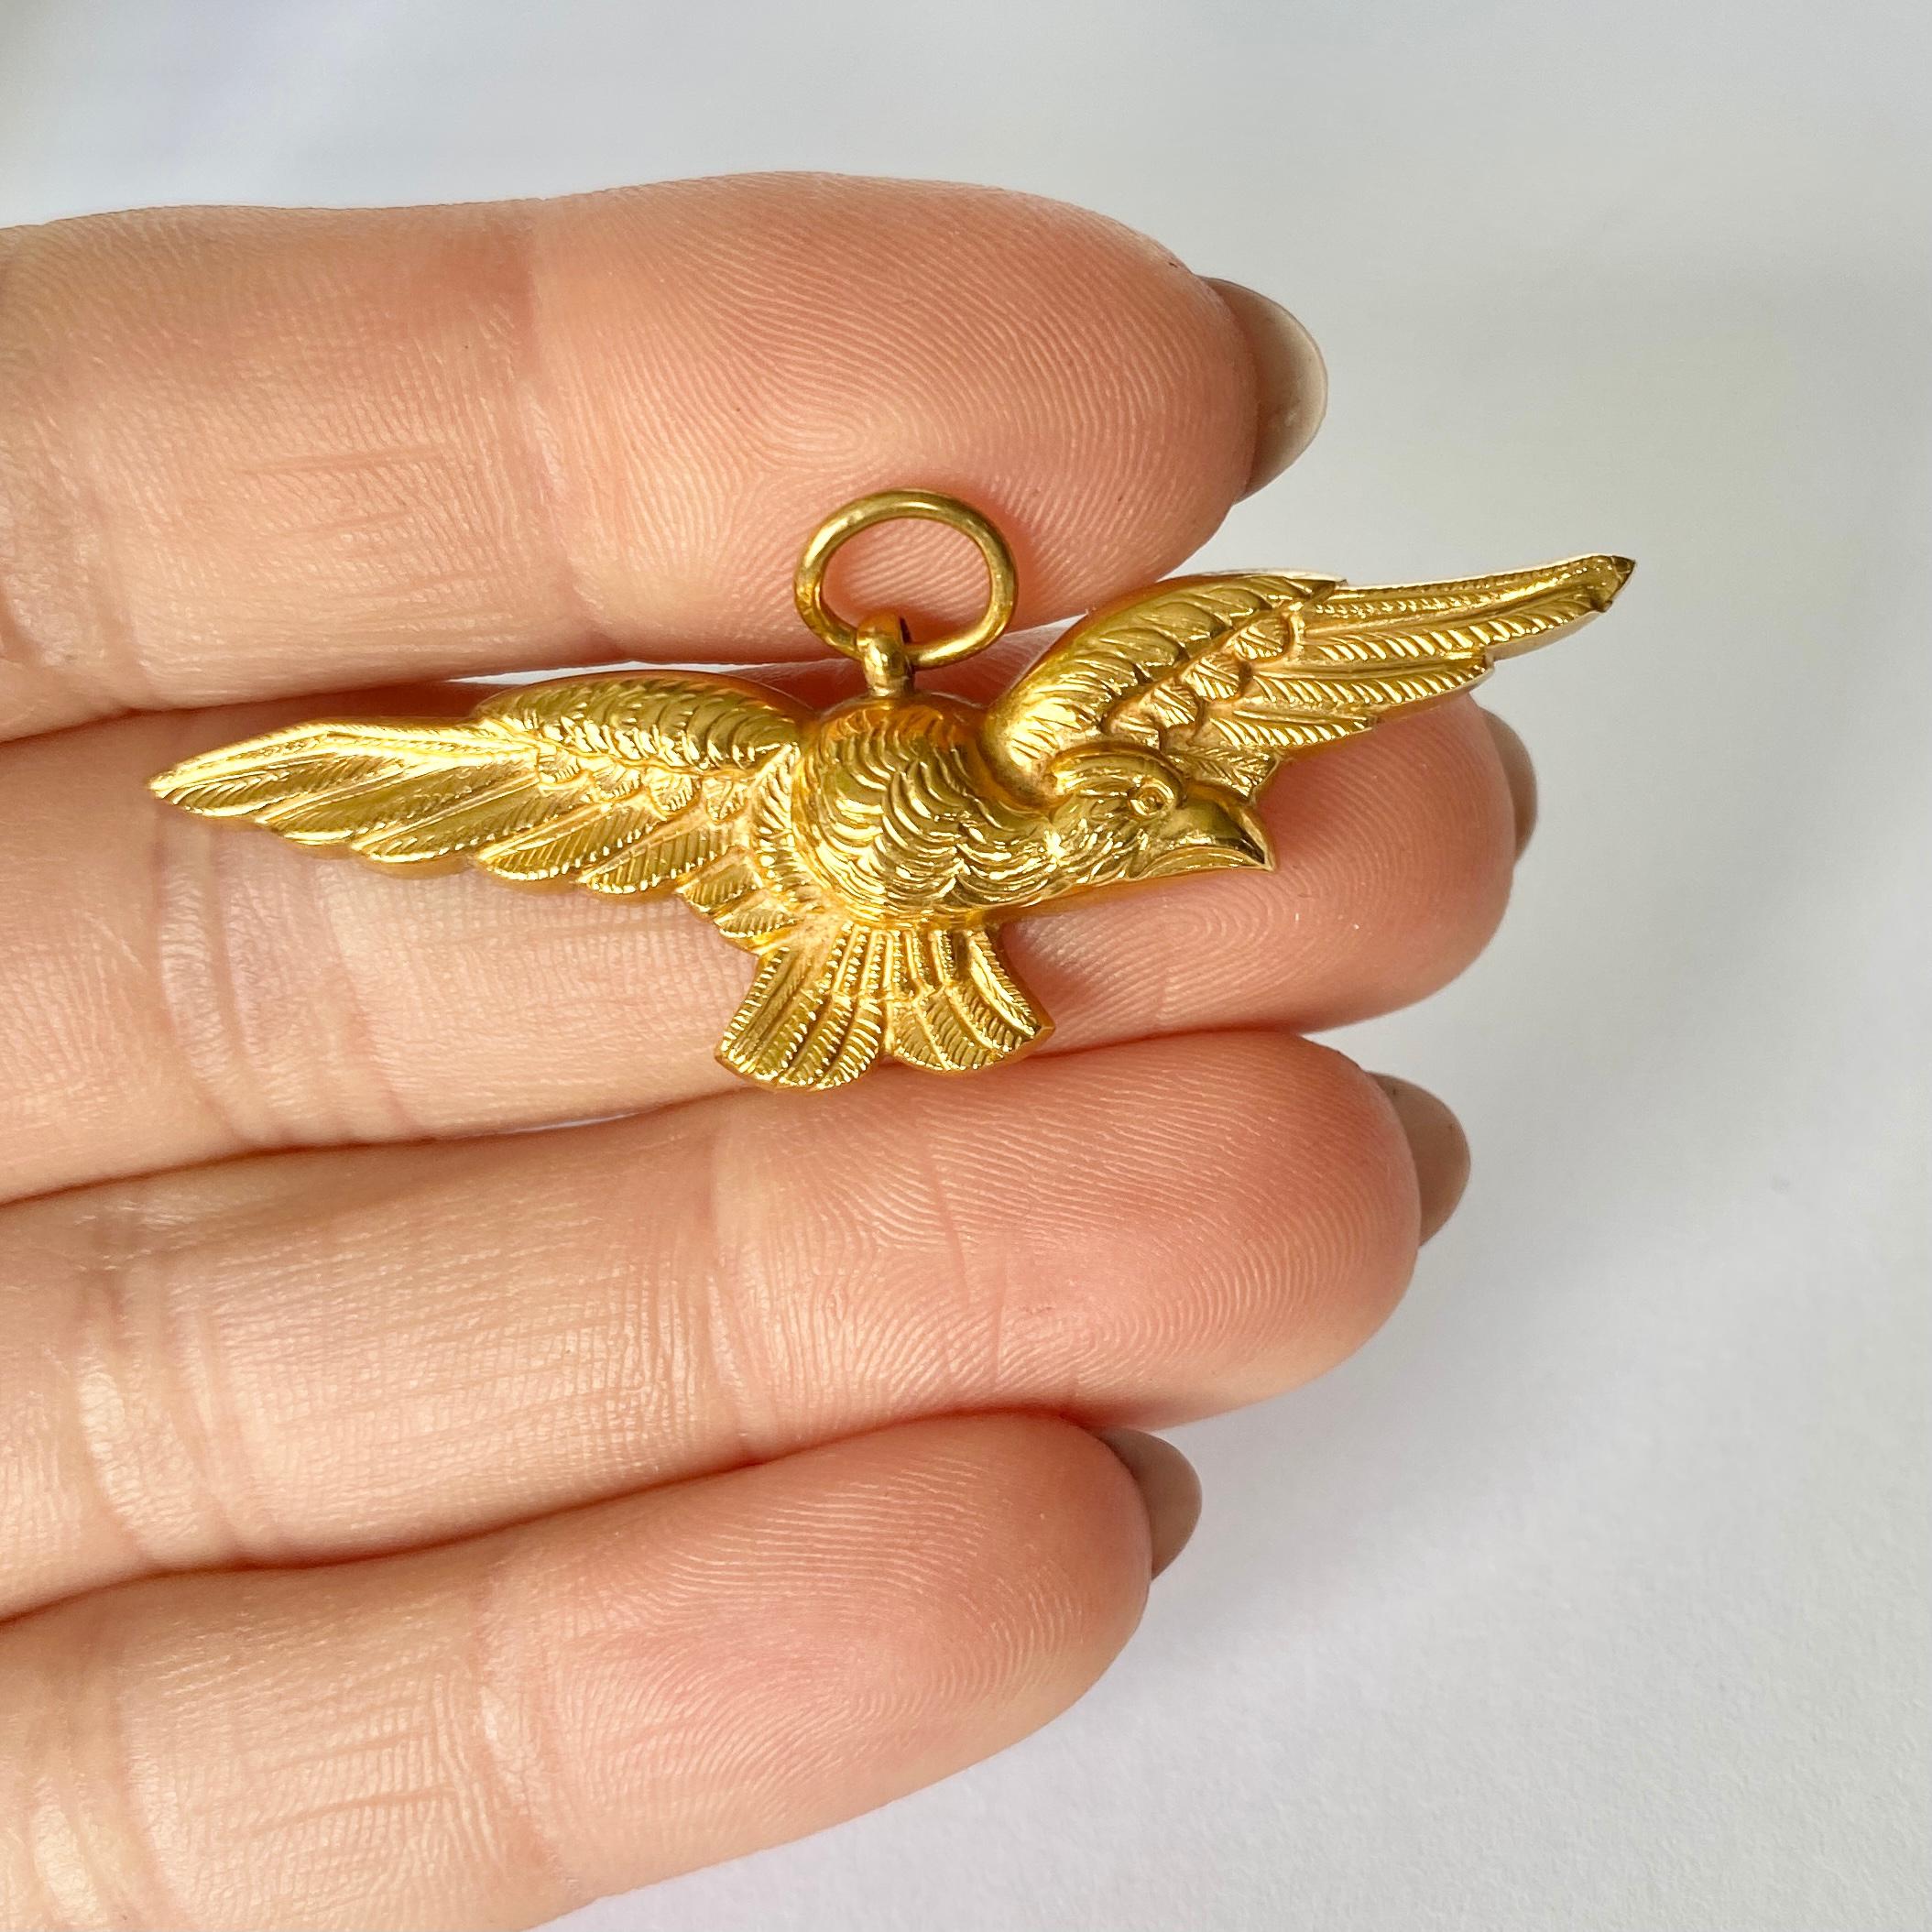 vintage gold eagle pendant